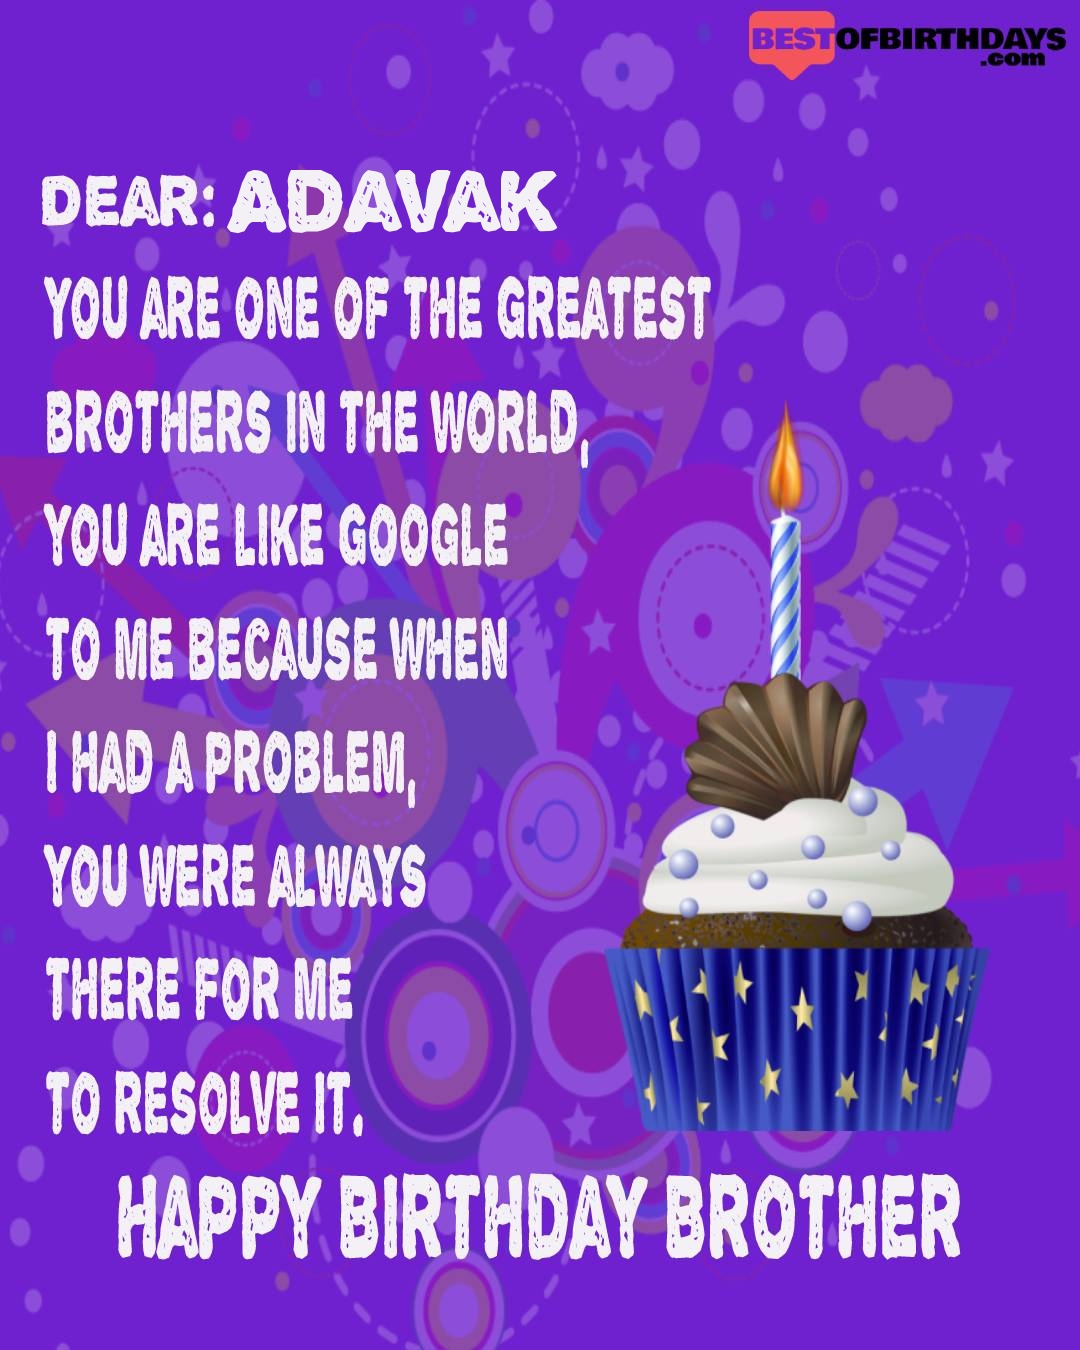 Happy birthday adavak bhai brother bro